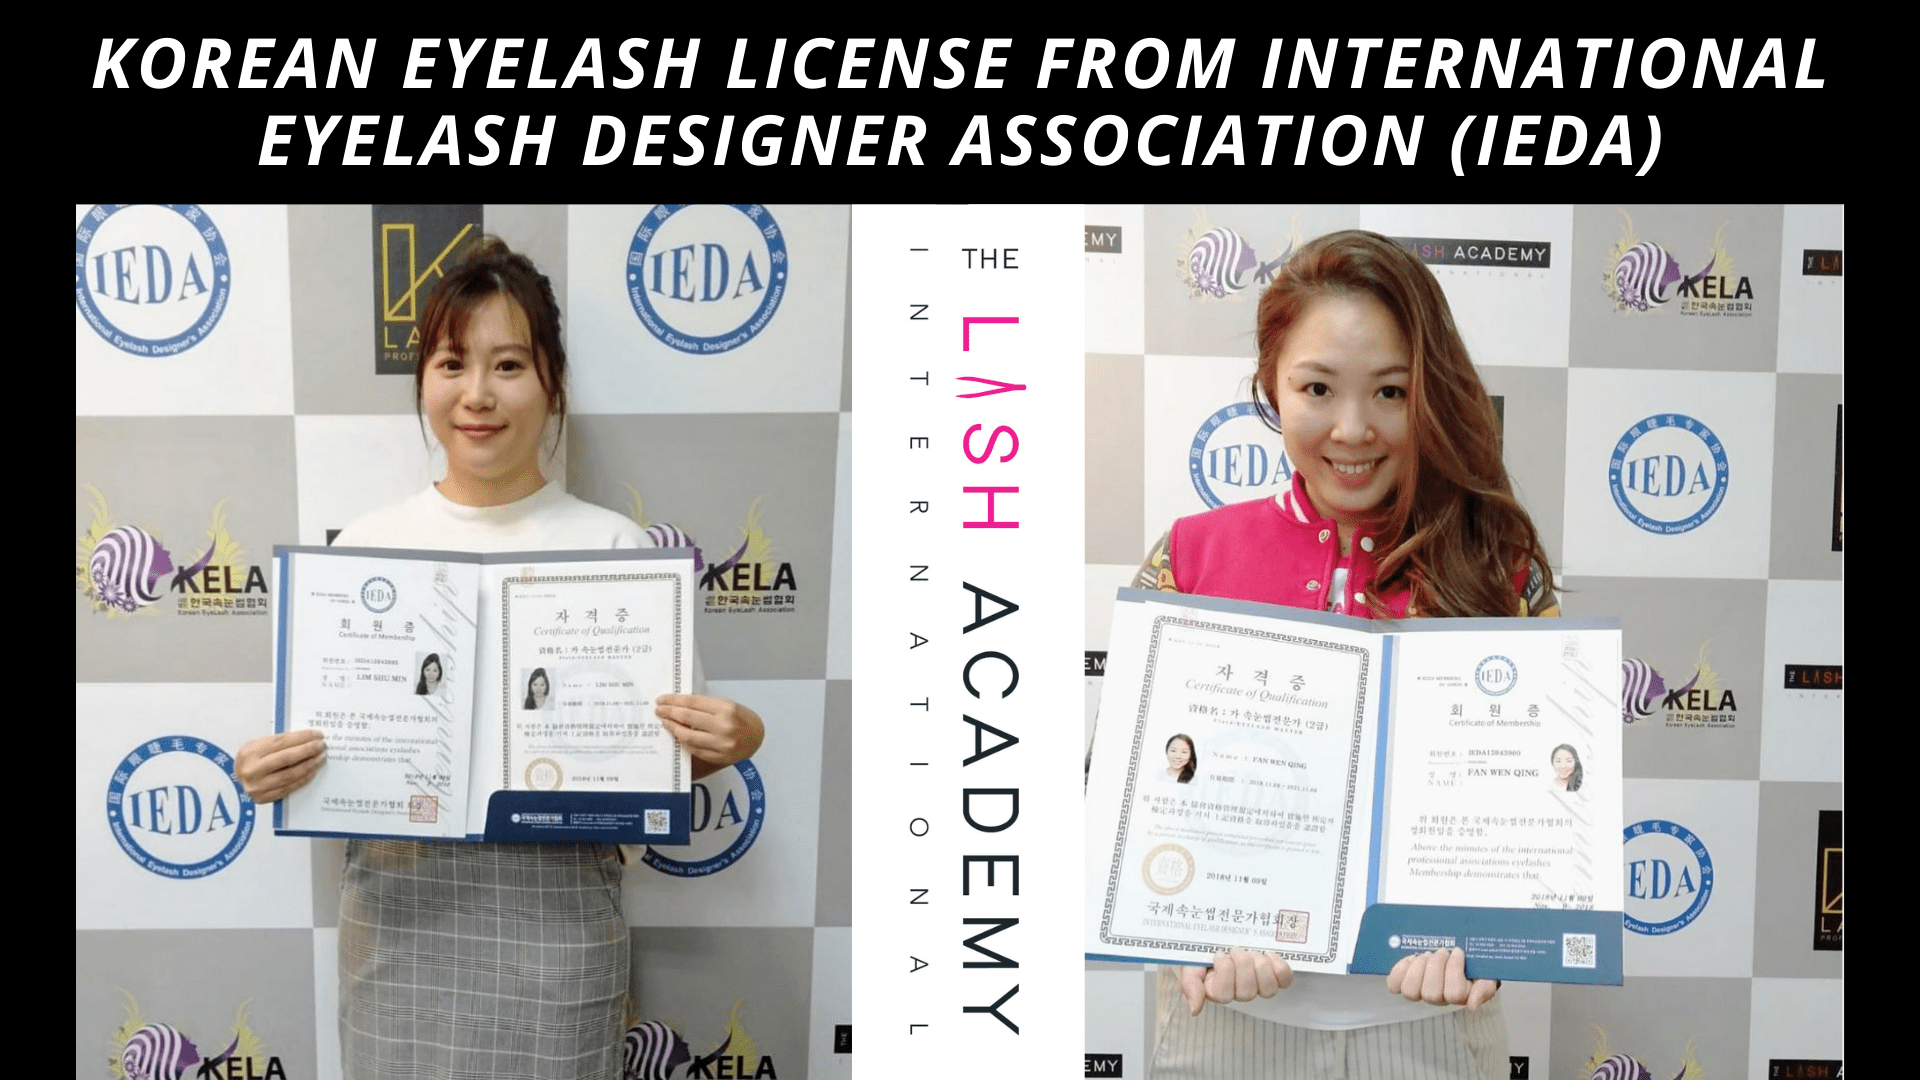 IEDA certified lash artist The Lash Academy